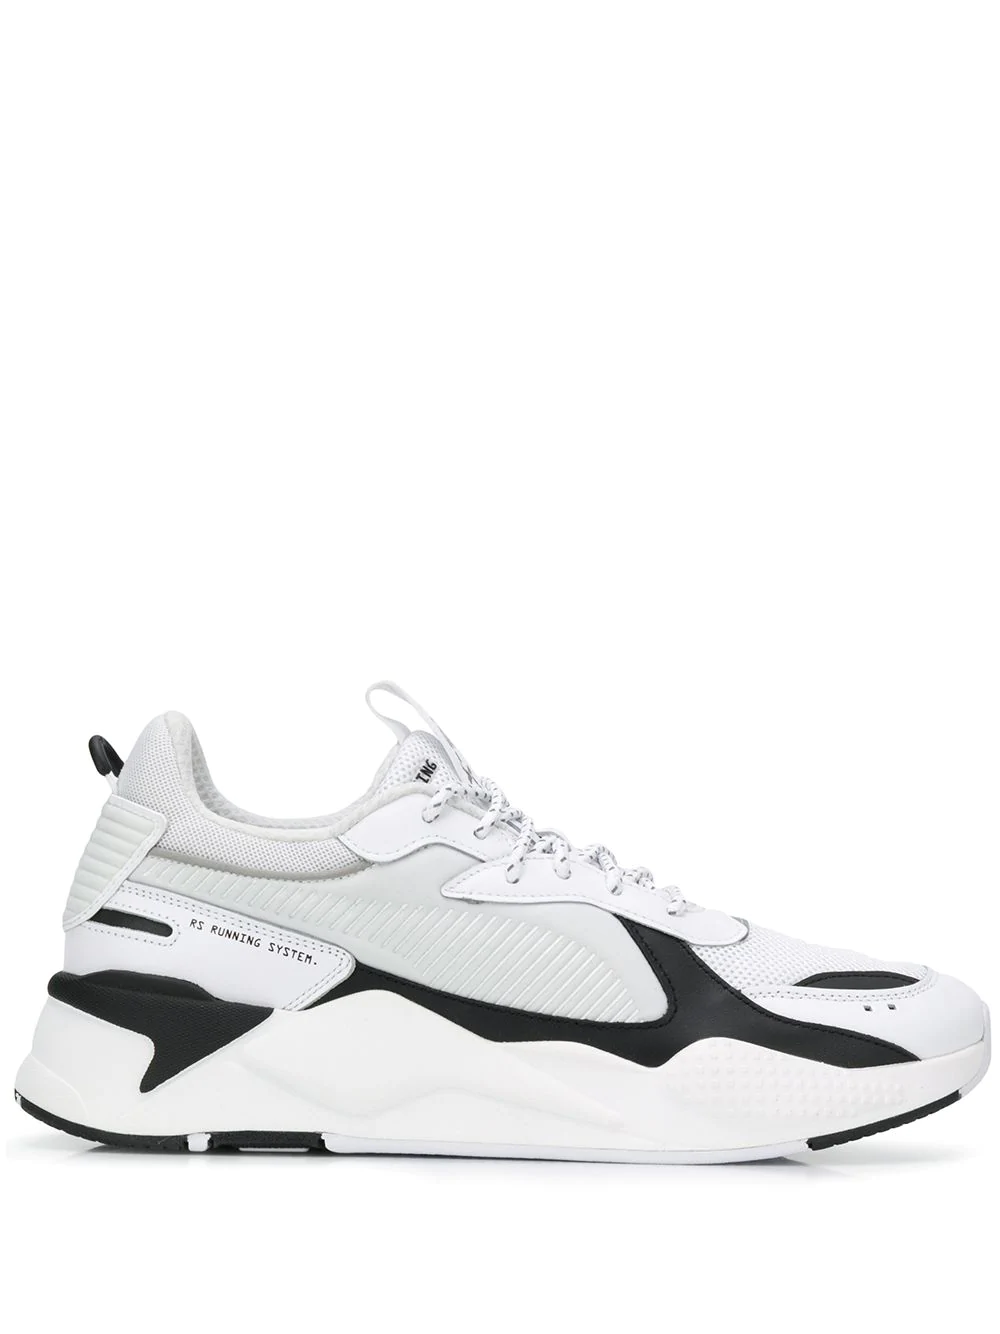 Puma Rs-x Sneakers - White | ModeSens